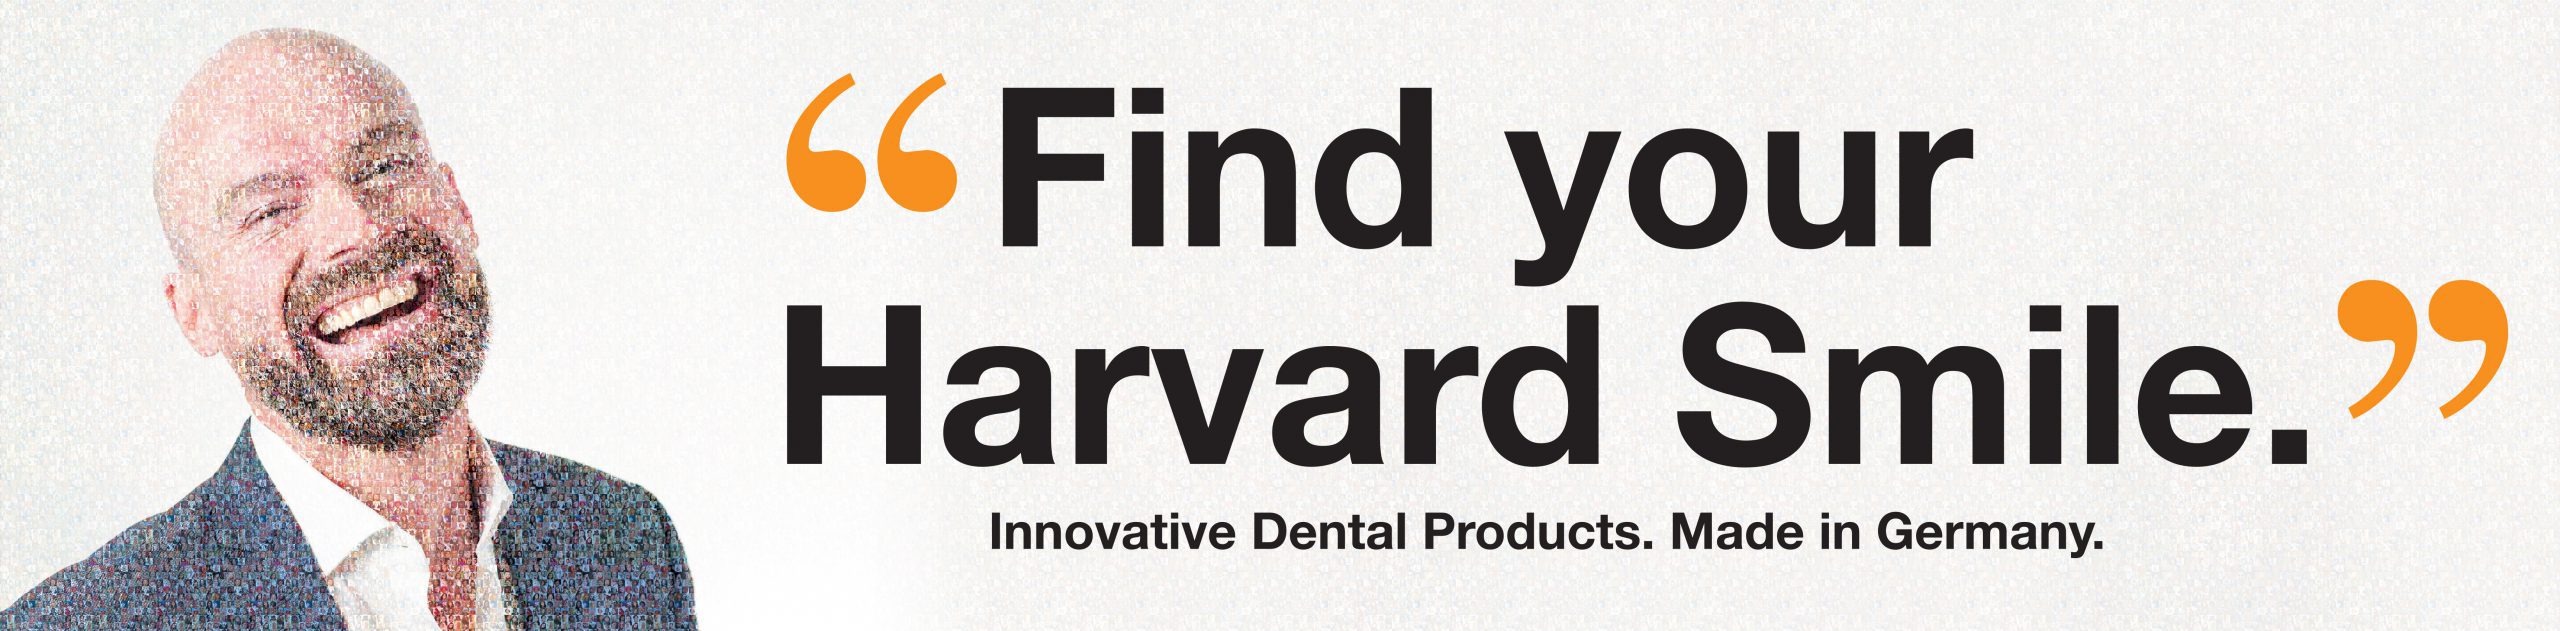 Dental Kod Harvard